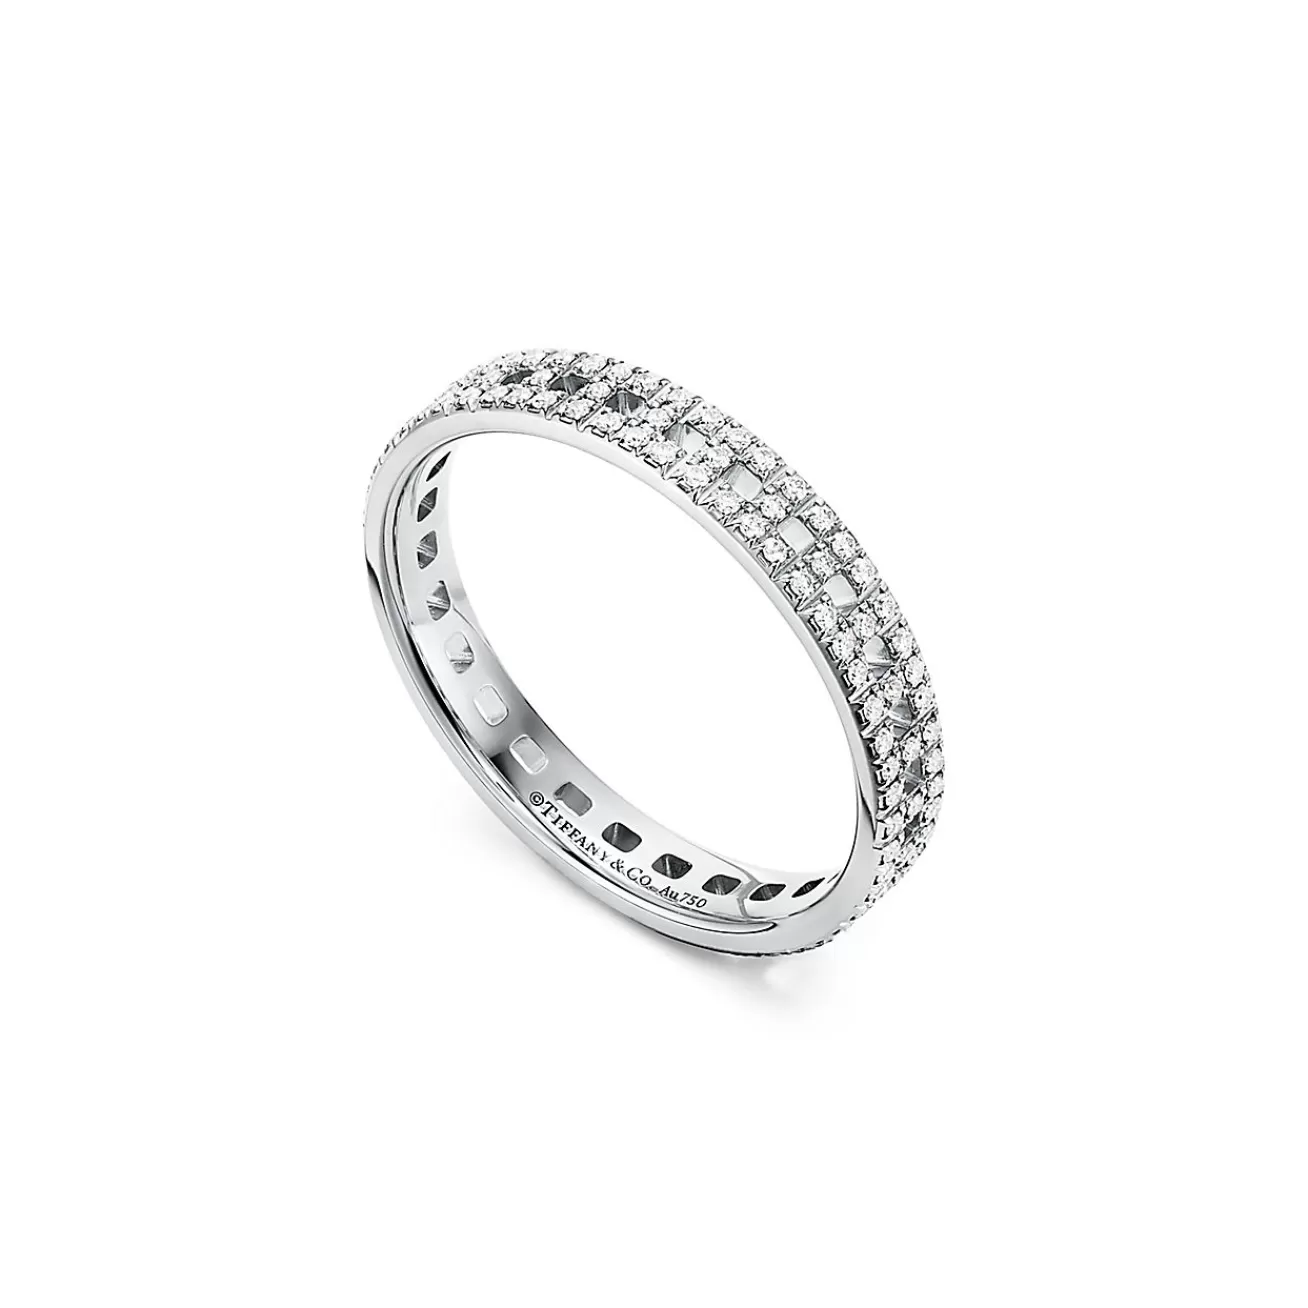 Tiffany & Co. Tiffany T True narrow ring in 18k white gold with pavé diamonds, 3.5 mm wide. | ^Women Rings | Men's Jewelry